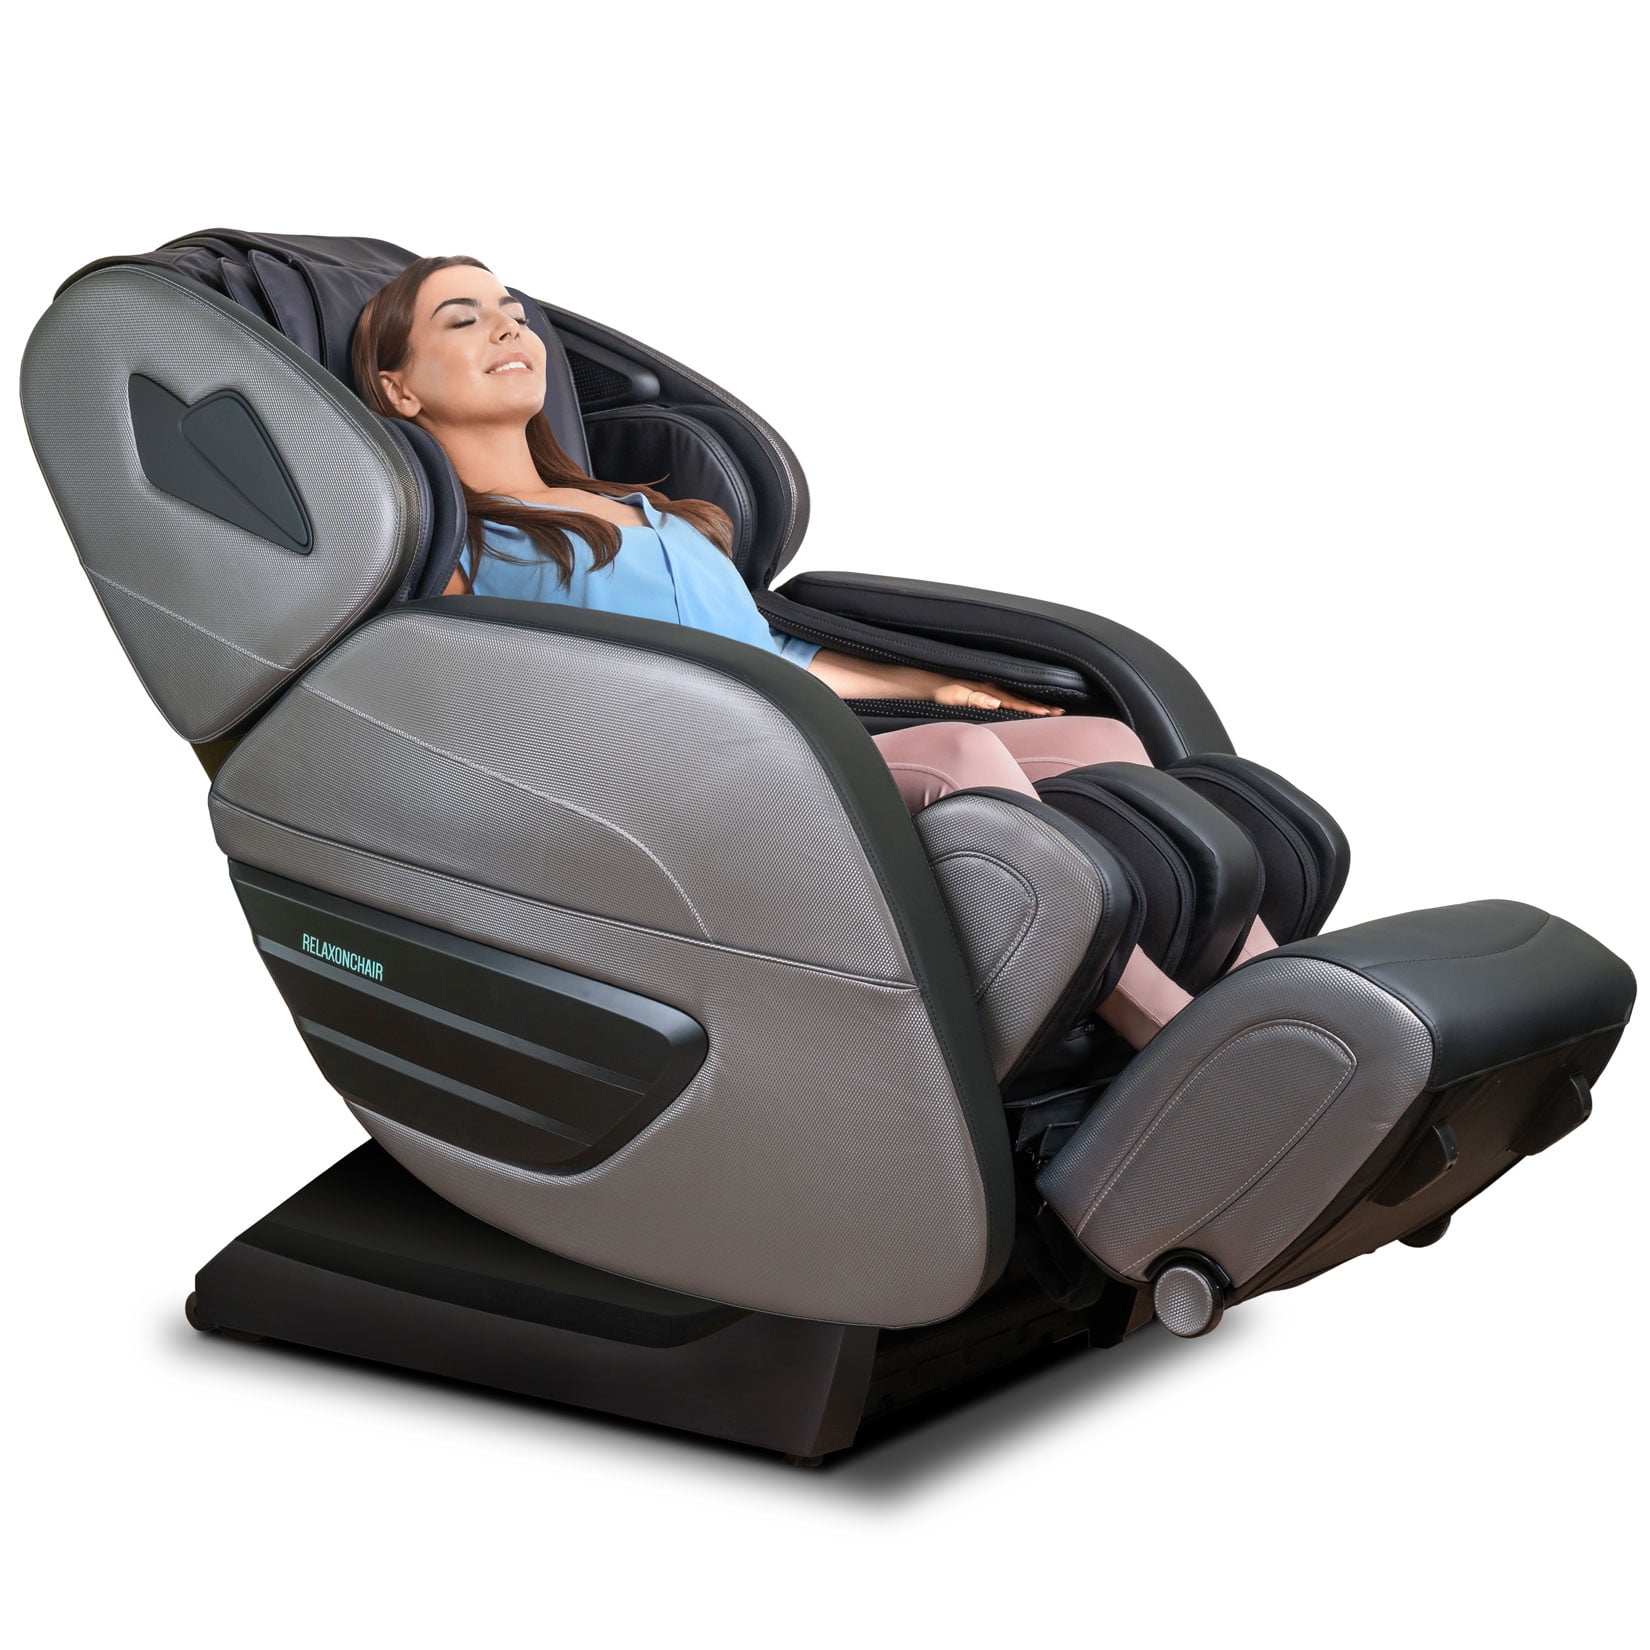 RELAXONCHAIR Full Body Massage Chair, ION-3D - Champaign Gray - Walmart.com